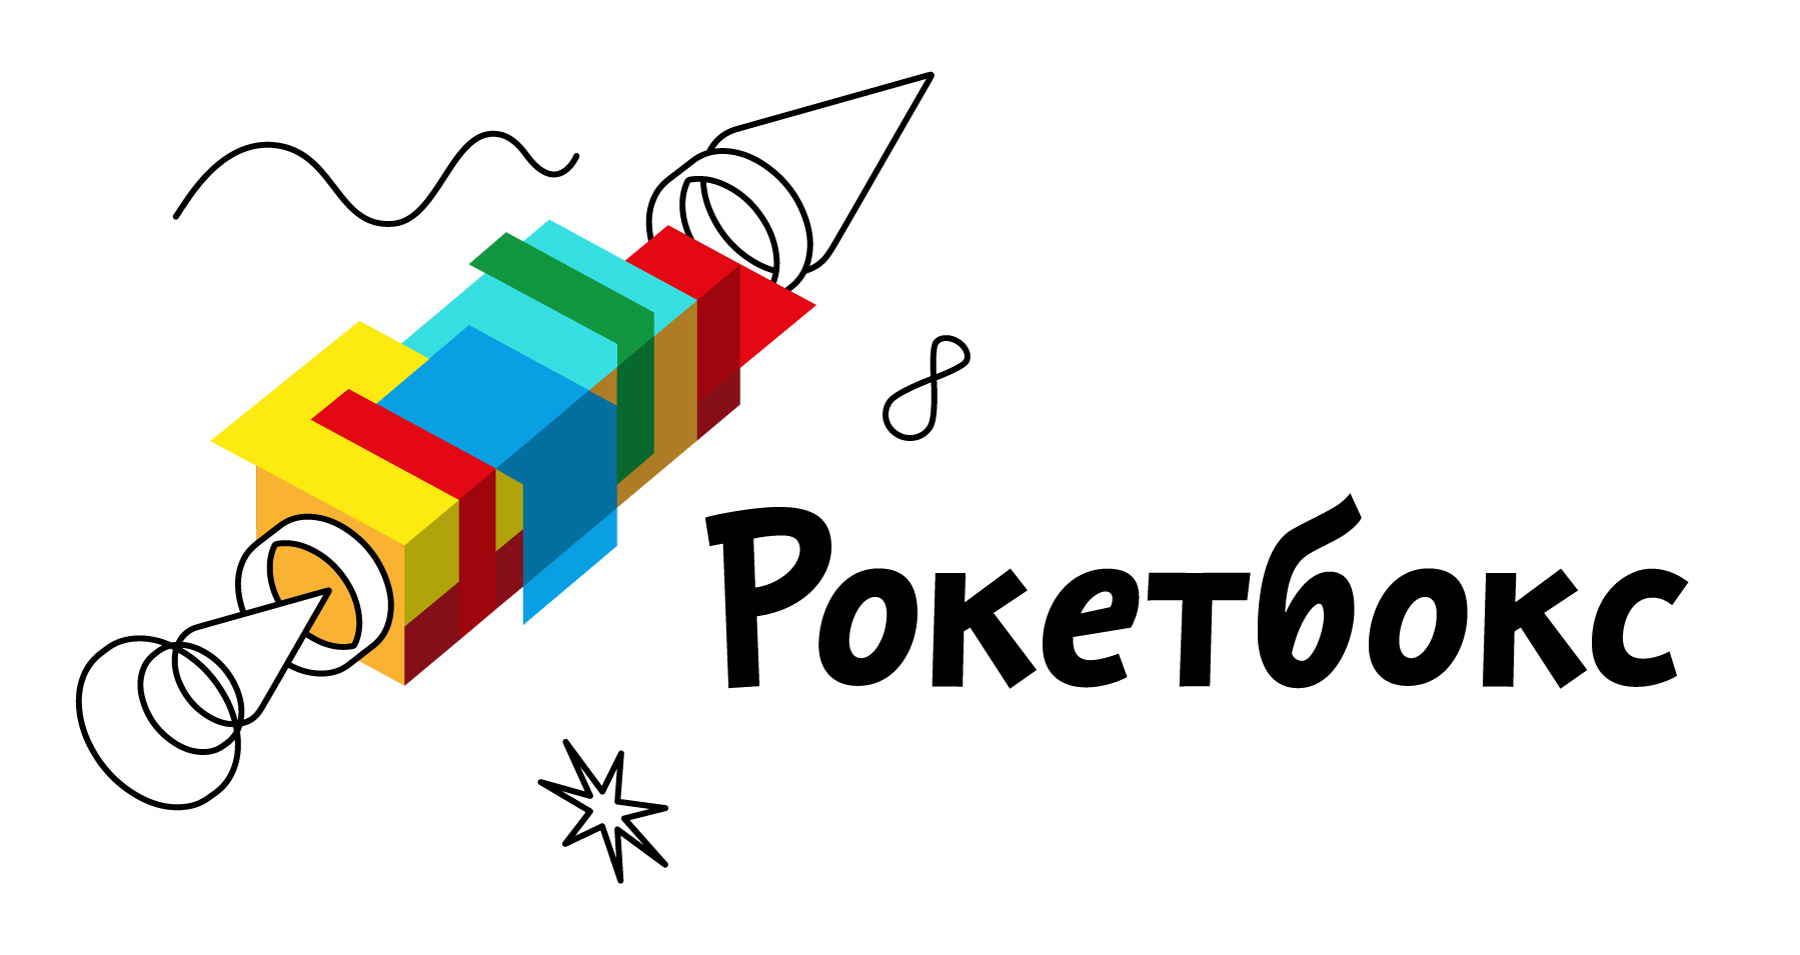 rocketbox logo